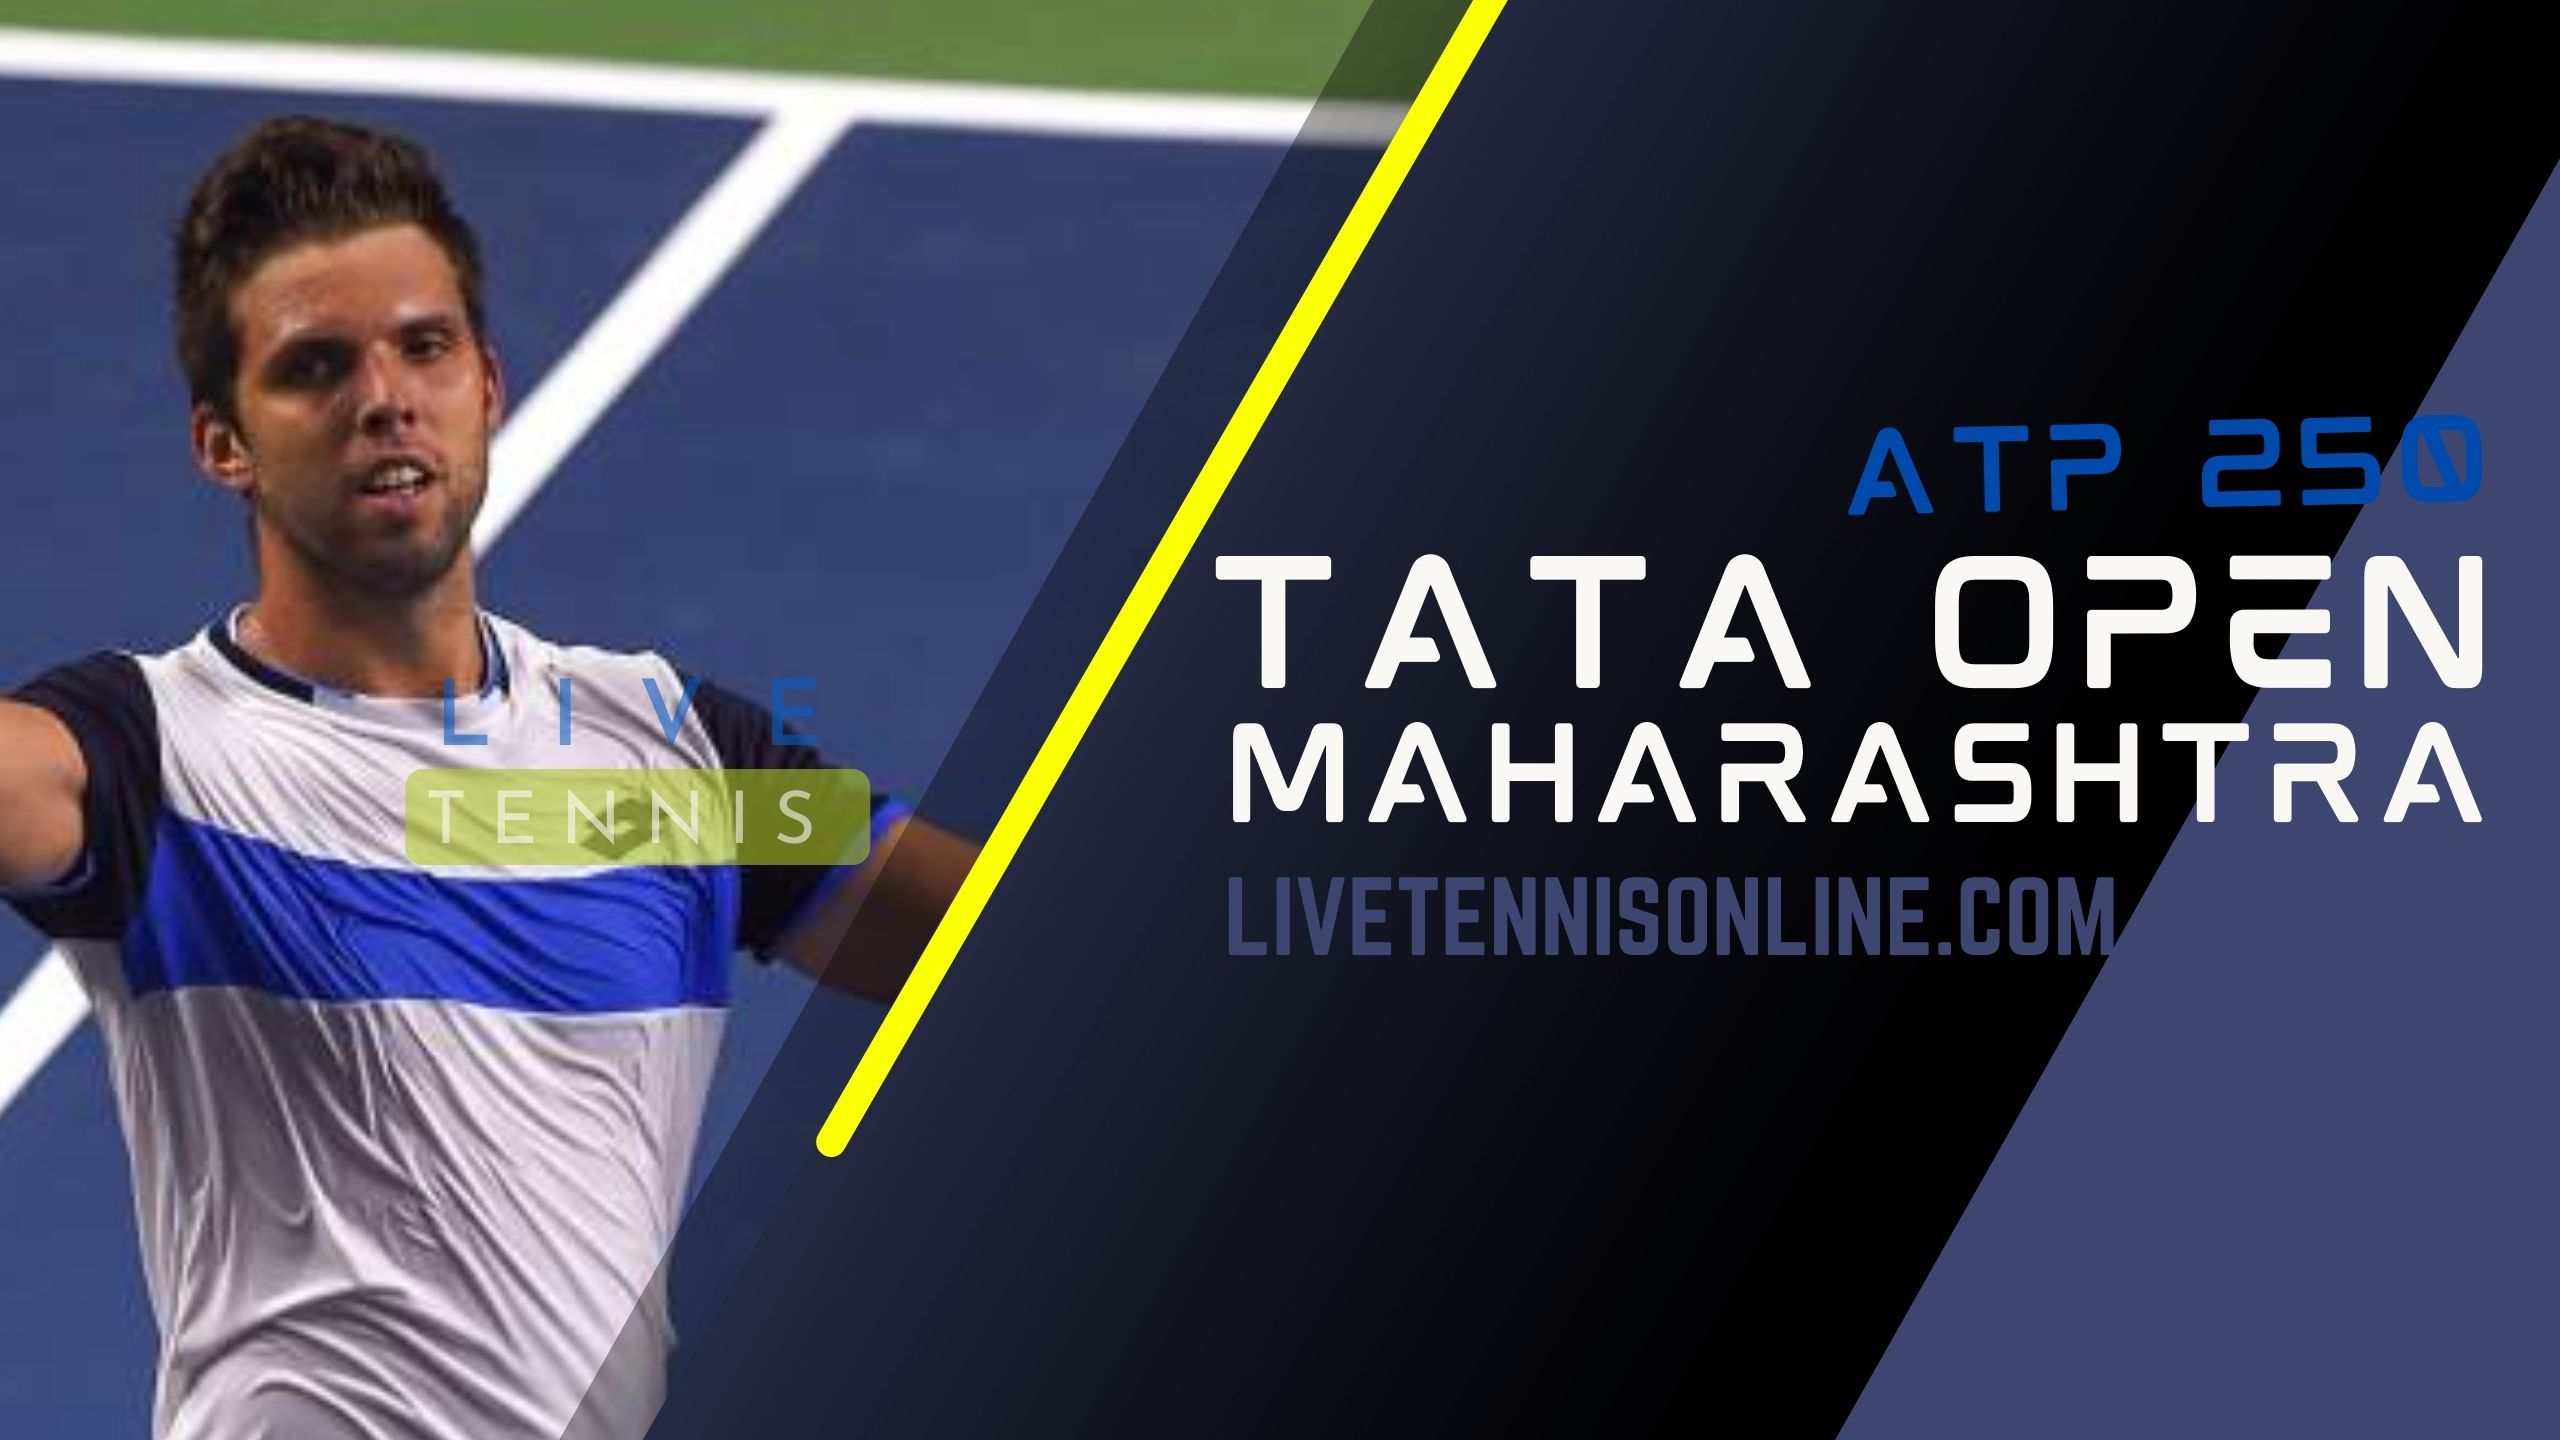 Tata Open Maharashtra Tennis 2019